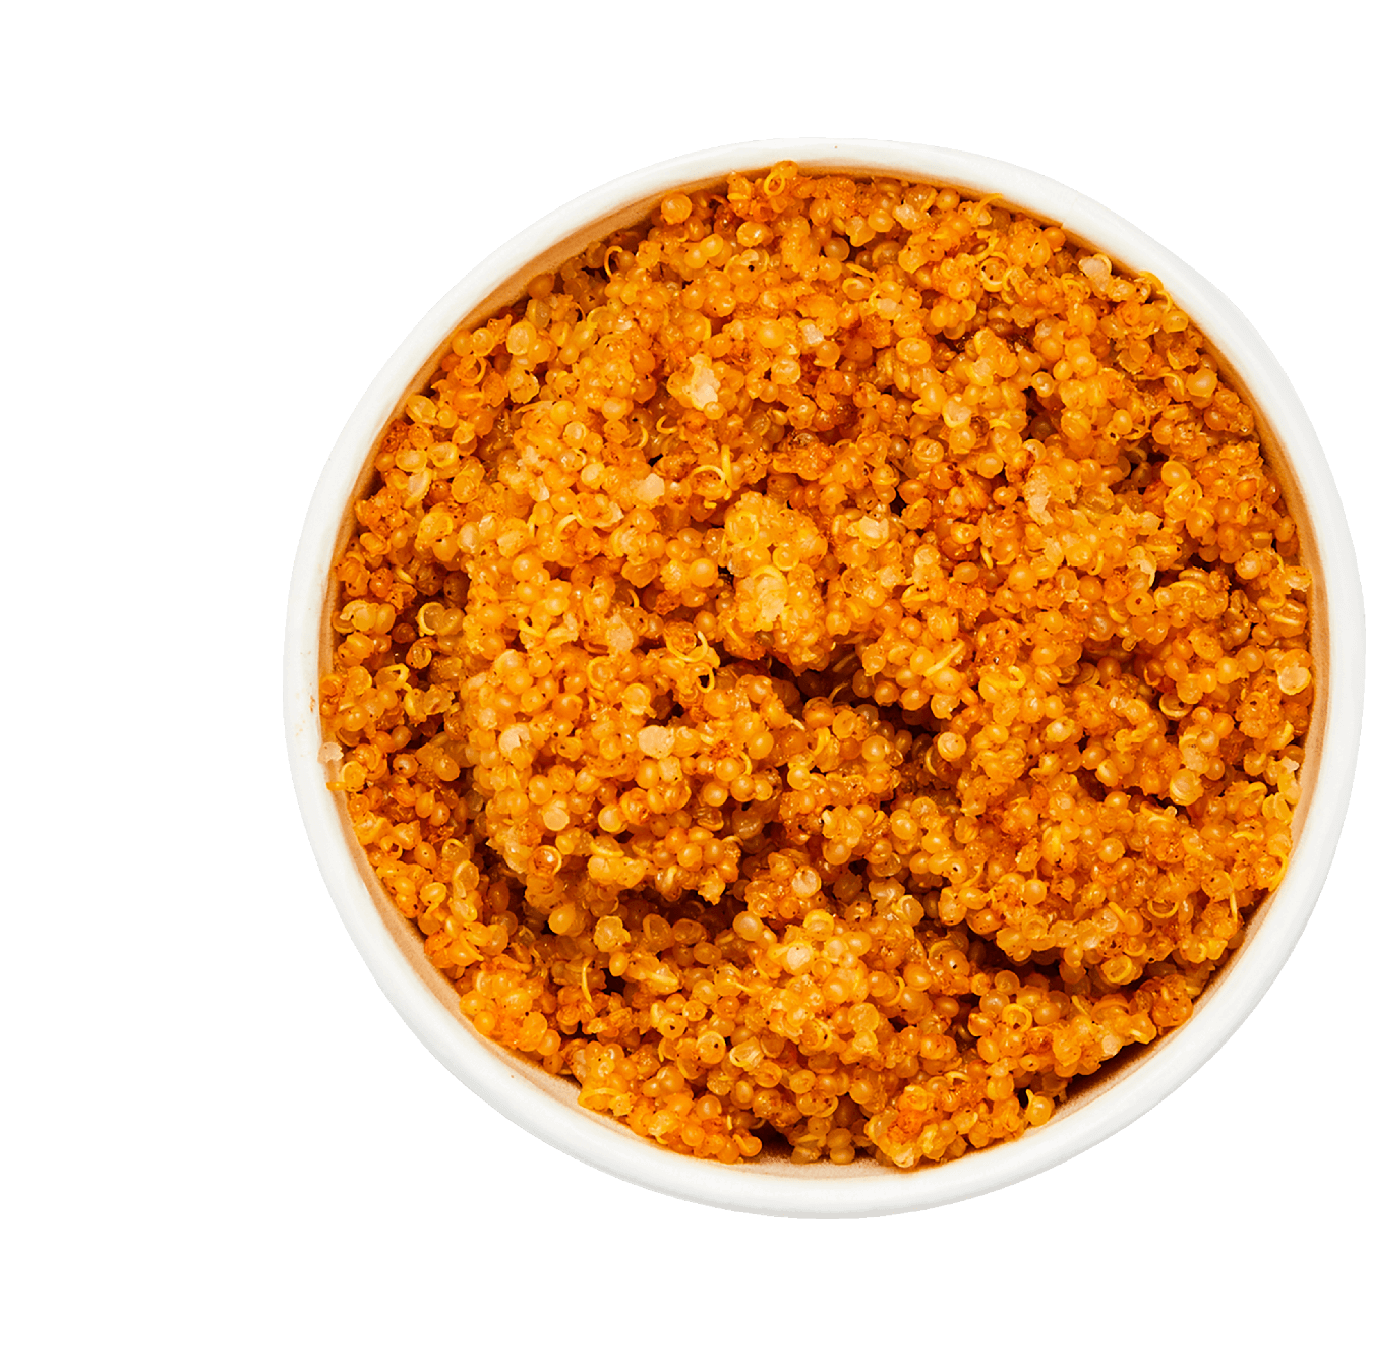 a side of Maepole's Quinoa